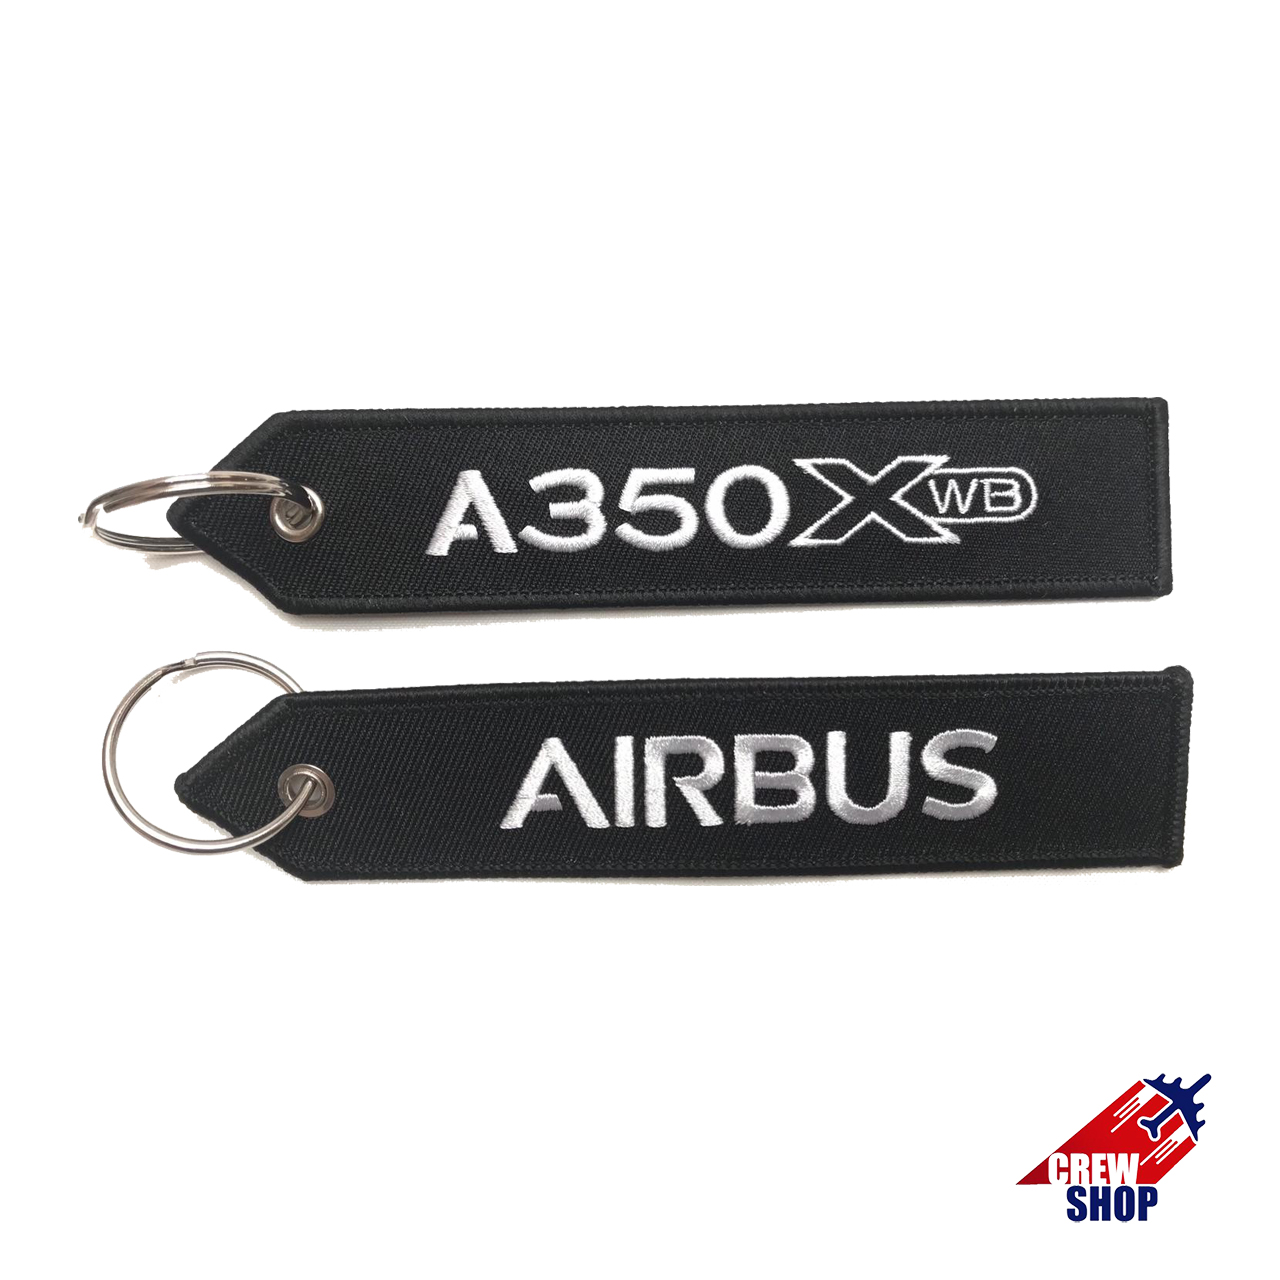 AIRBUS-A350XWB